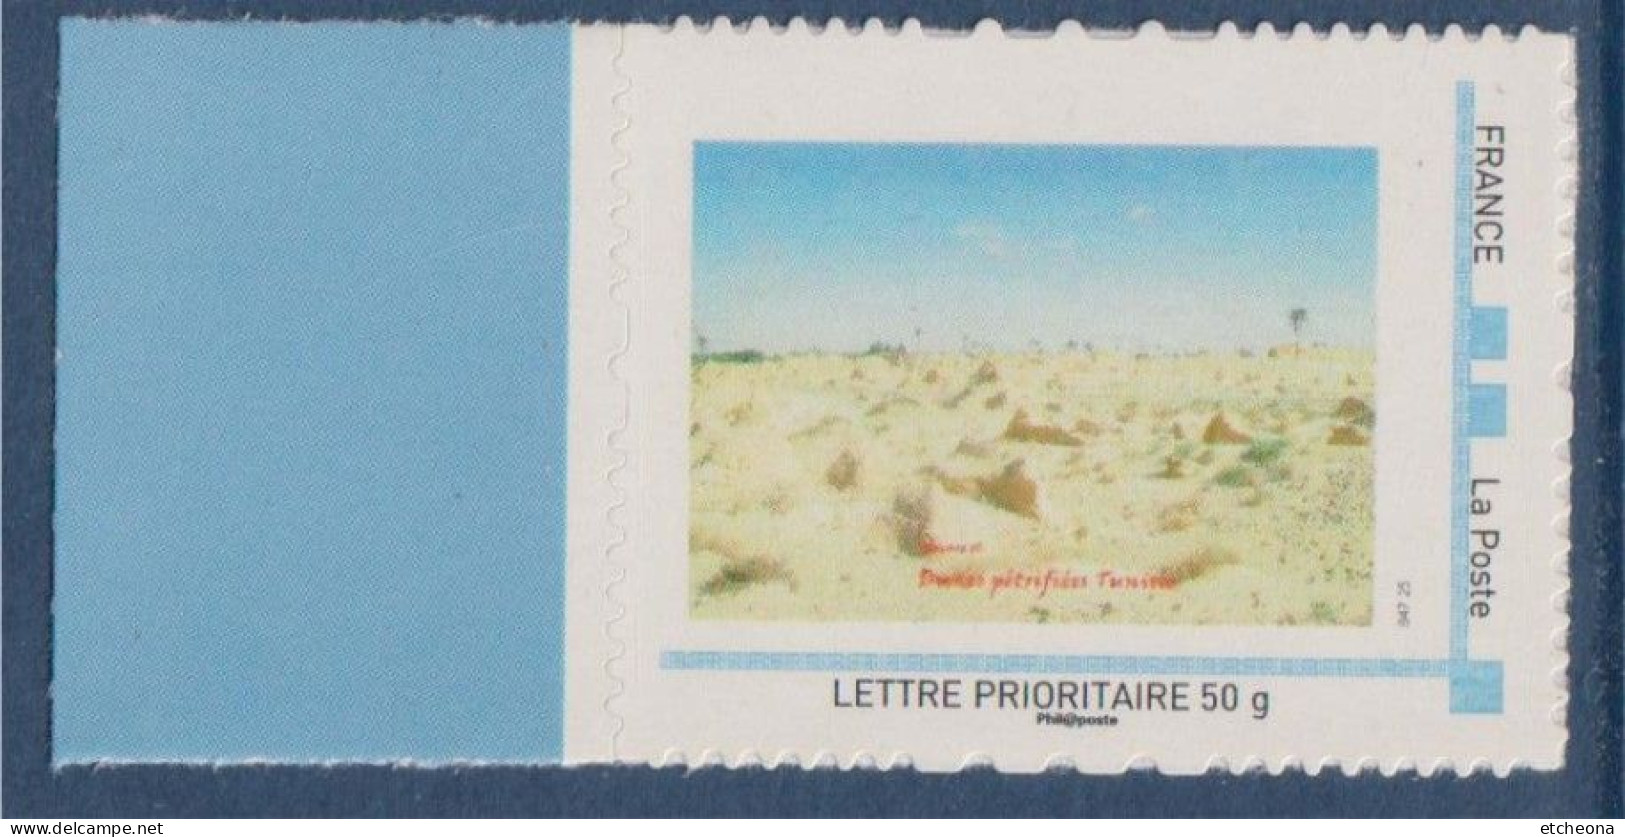 MonTimbraMoi, France -50g Horizontal, Série Nature, Dunes Pétrifiées  Tunisie, Type Etoile - Nuevos